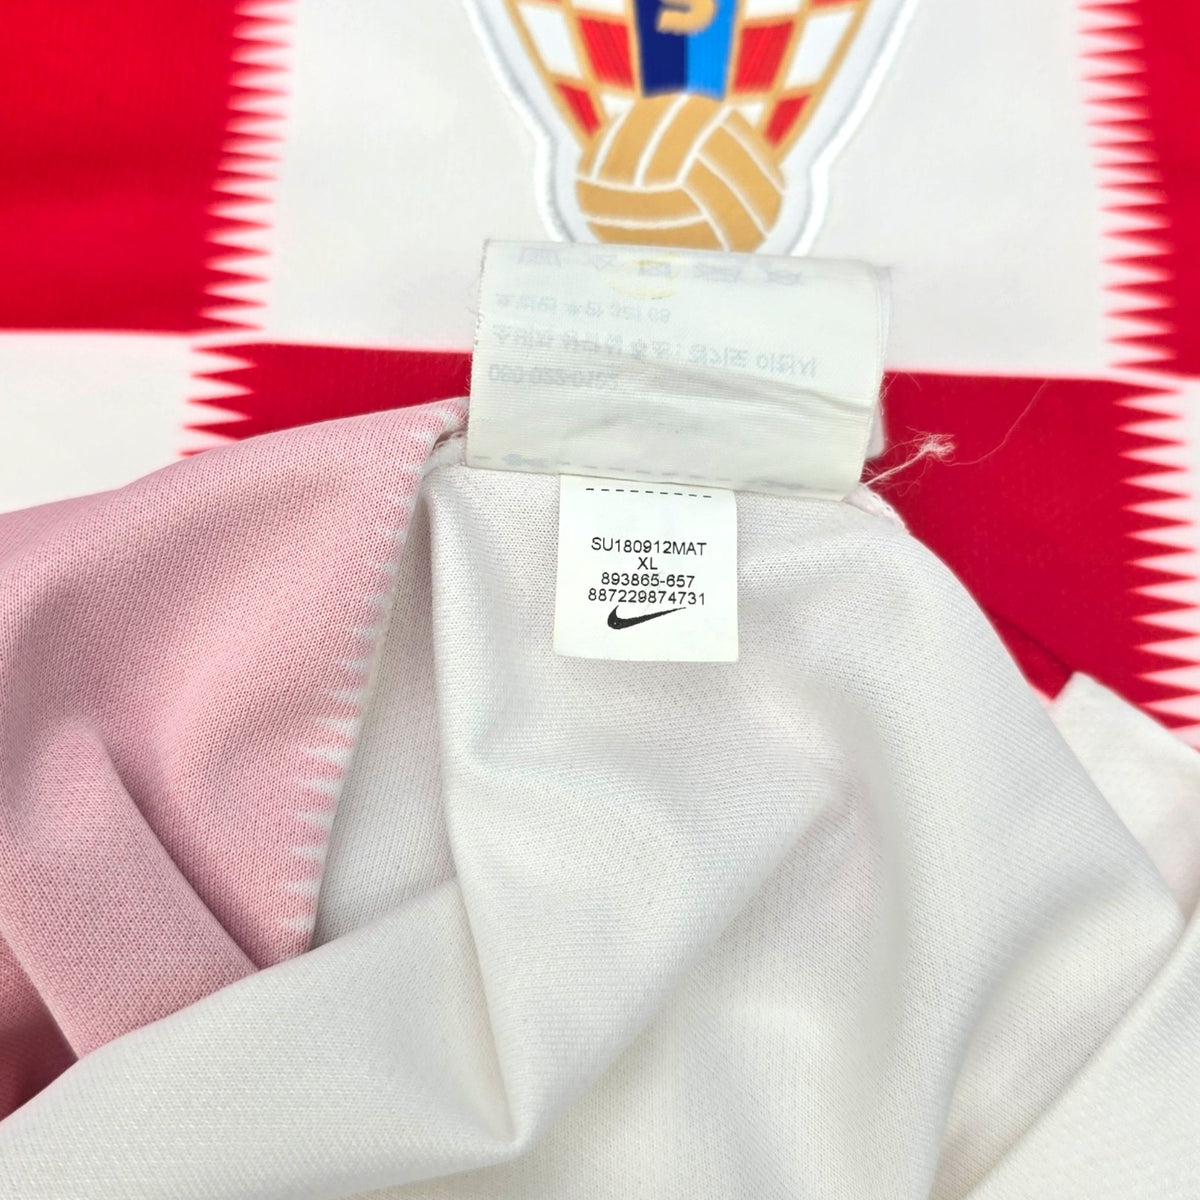 2018/19 Croatia Home Football Shirt (XL) Nike #10 Modric - Football Finery - FF203882